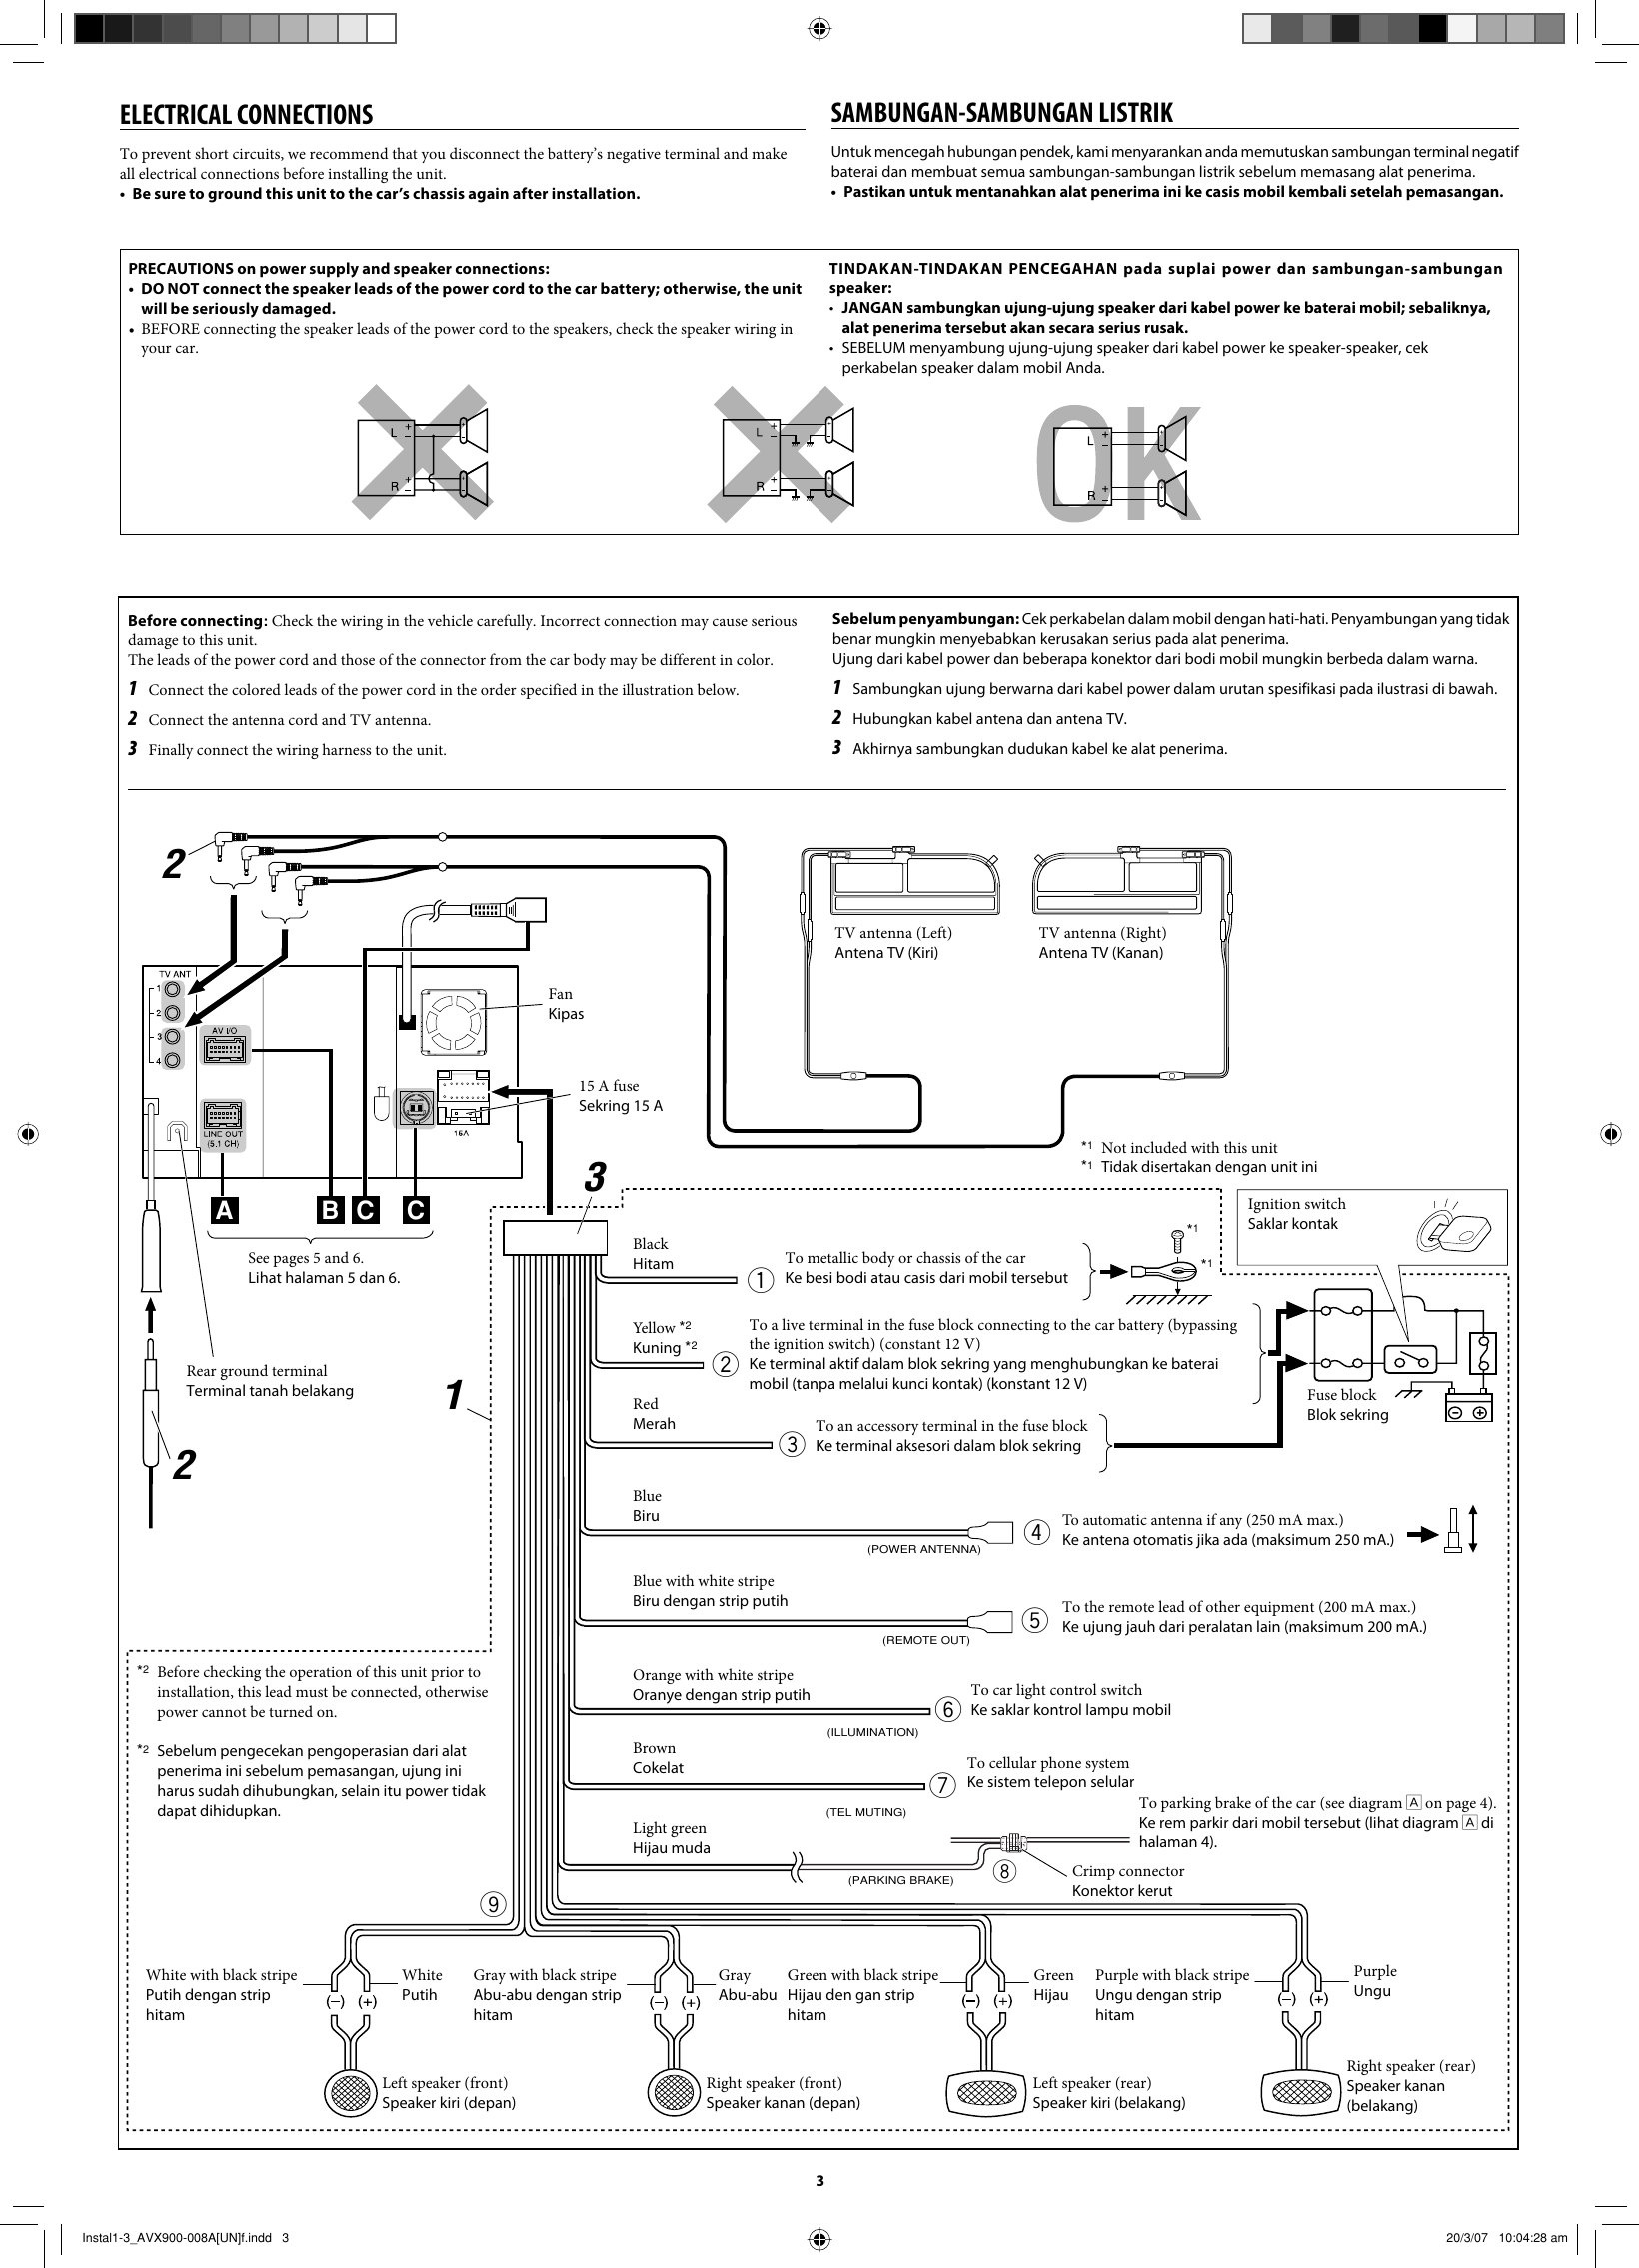 Page 3 of 6 - JVC KW-AVX900UN KW-AVX900[UN] Installation User Manual LVT1670-008A